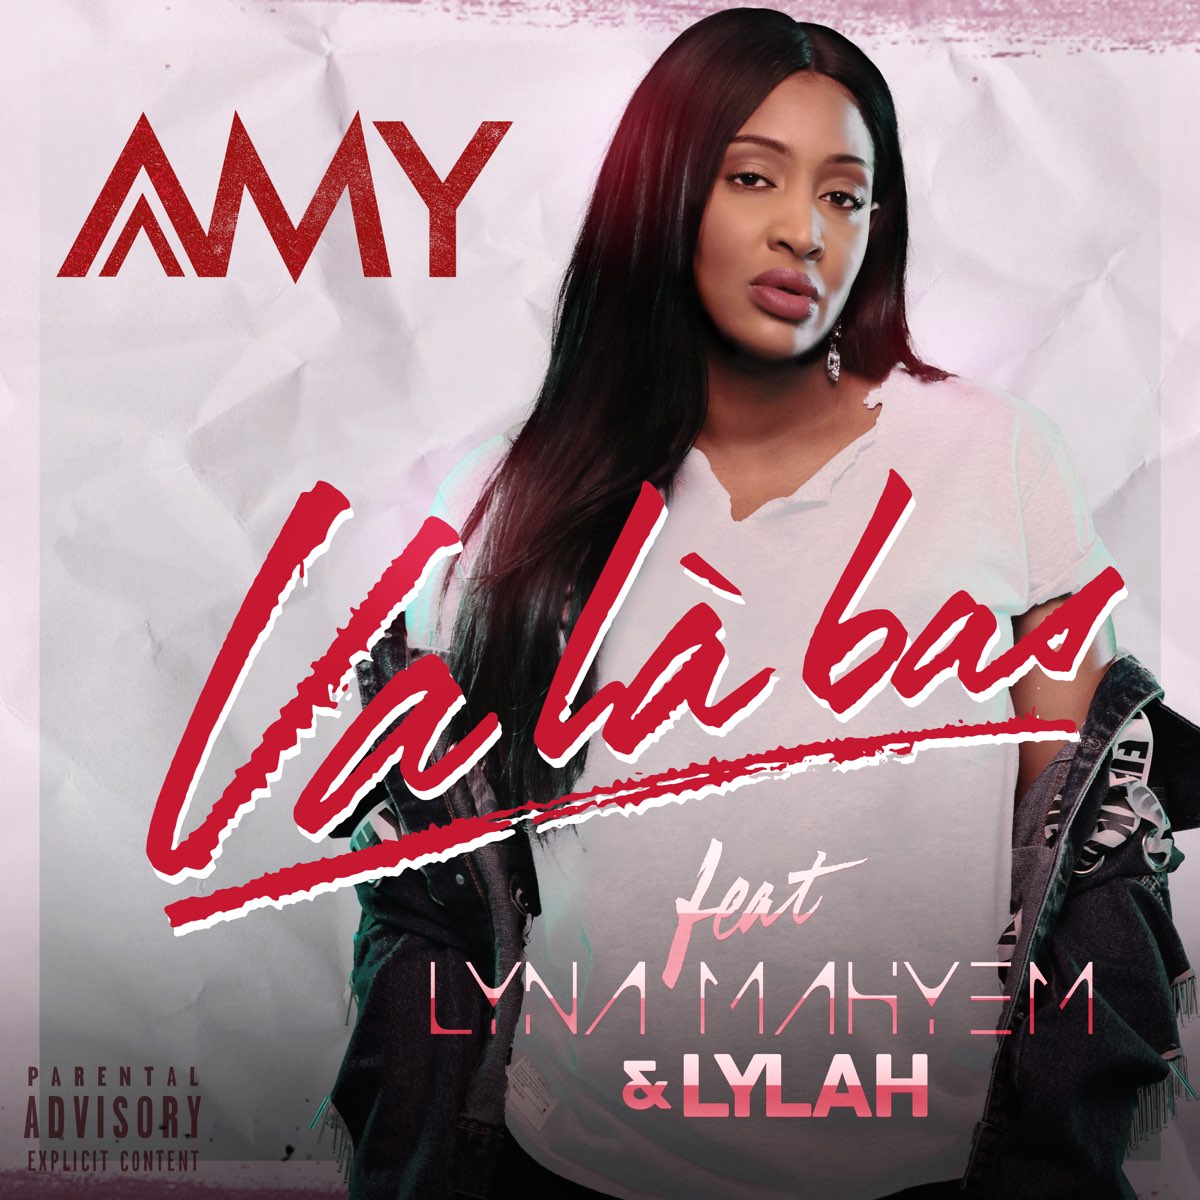 Va là-bas (feat. Lyna Mahyem & Lylah) - Single by Amy on Apple Music